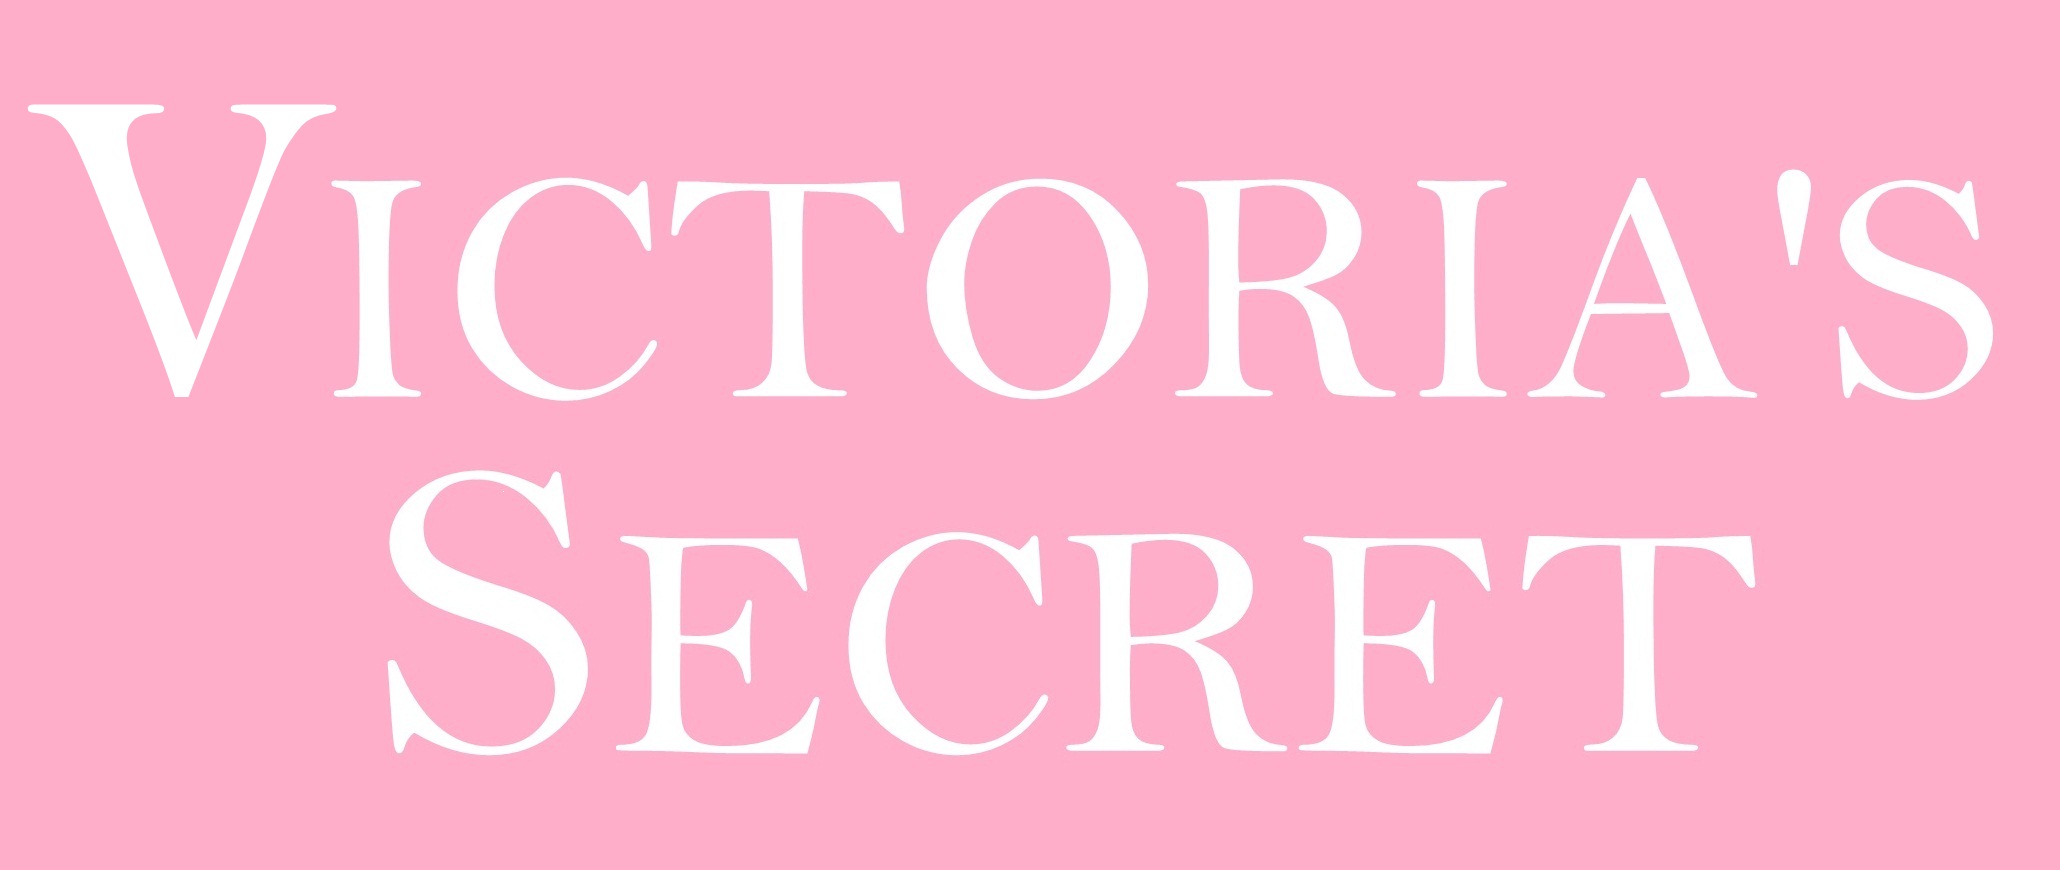 Pink Victorias Secret Wallpaper Background Imgx